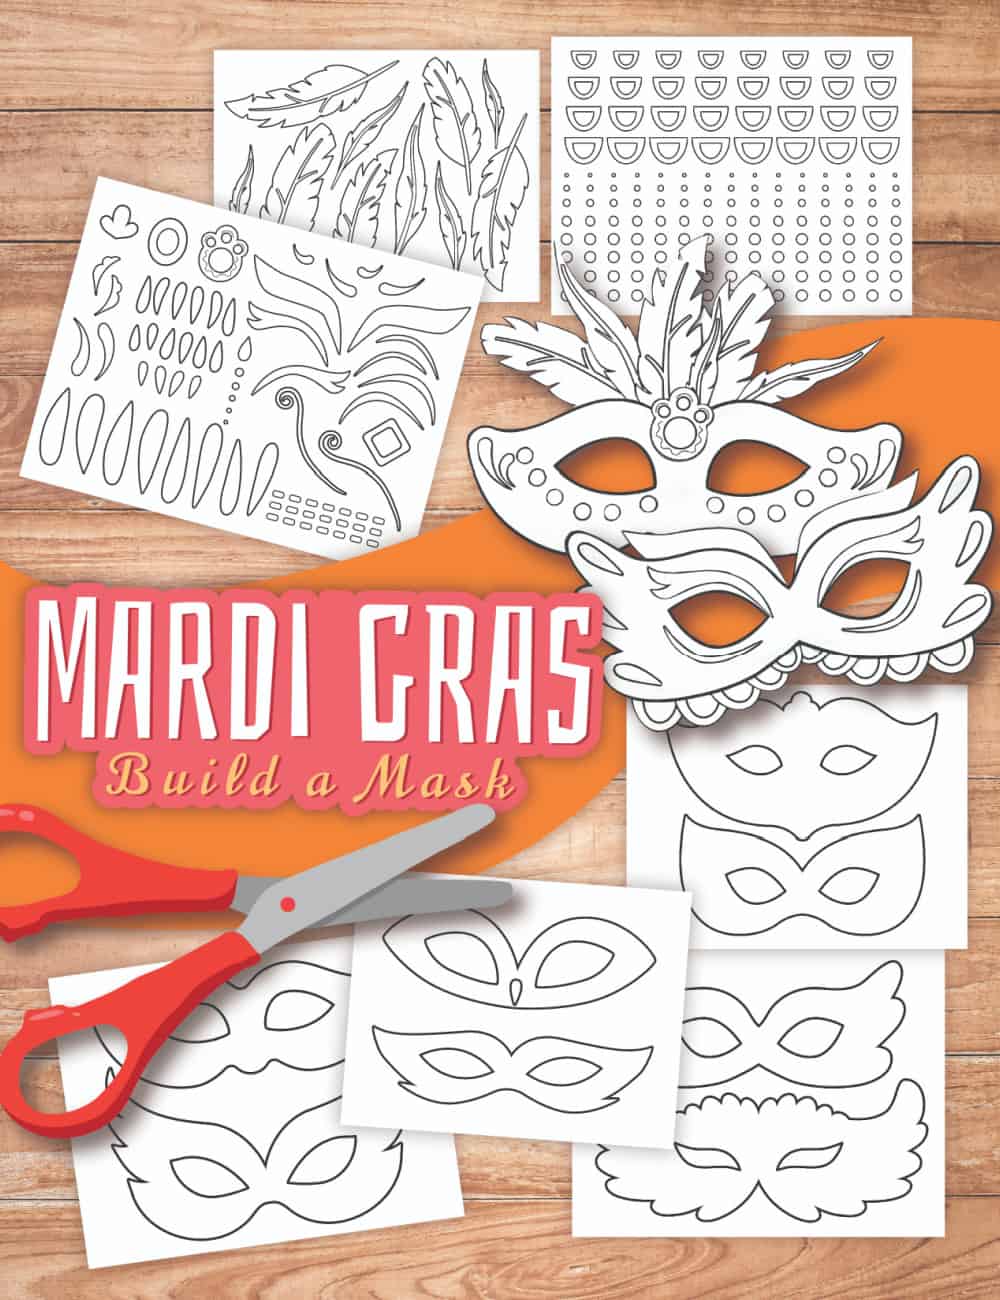 Make Your Own Mardi Gras Mask